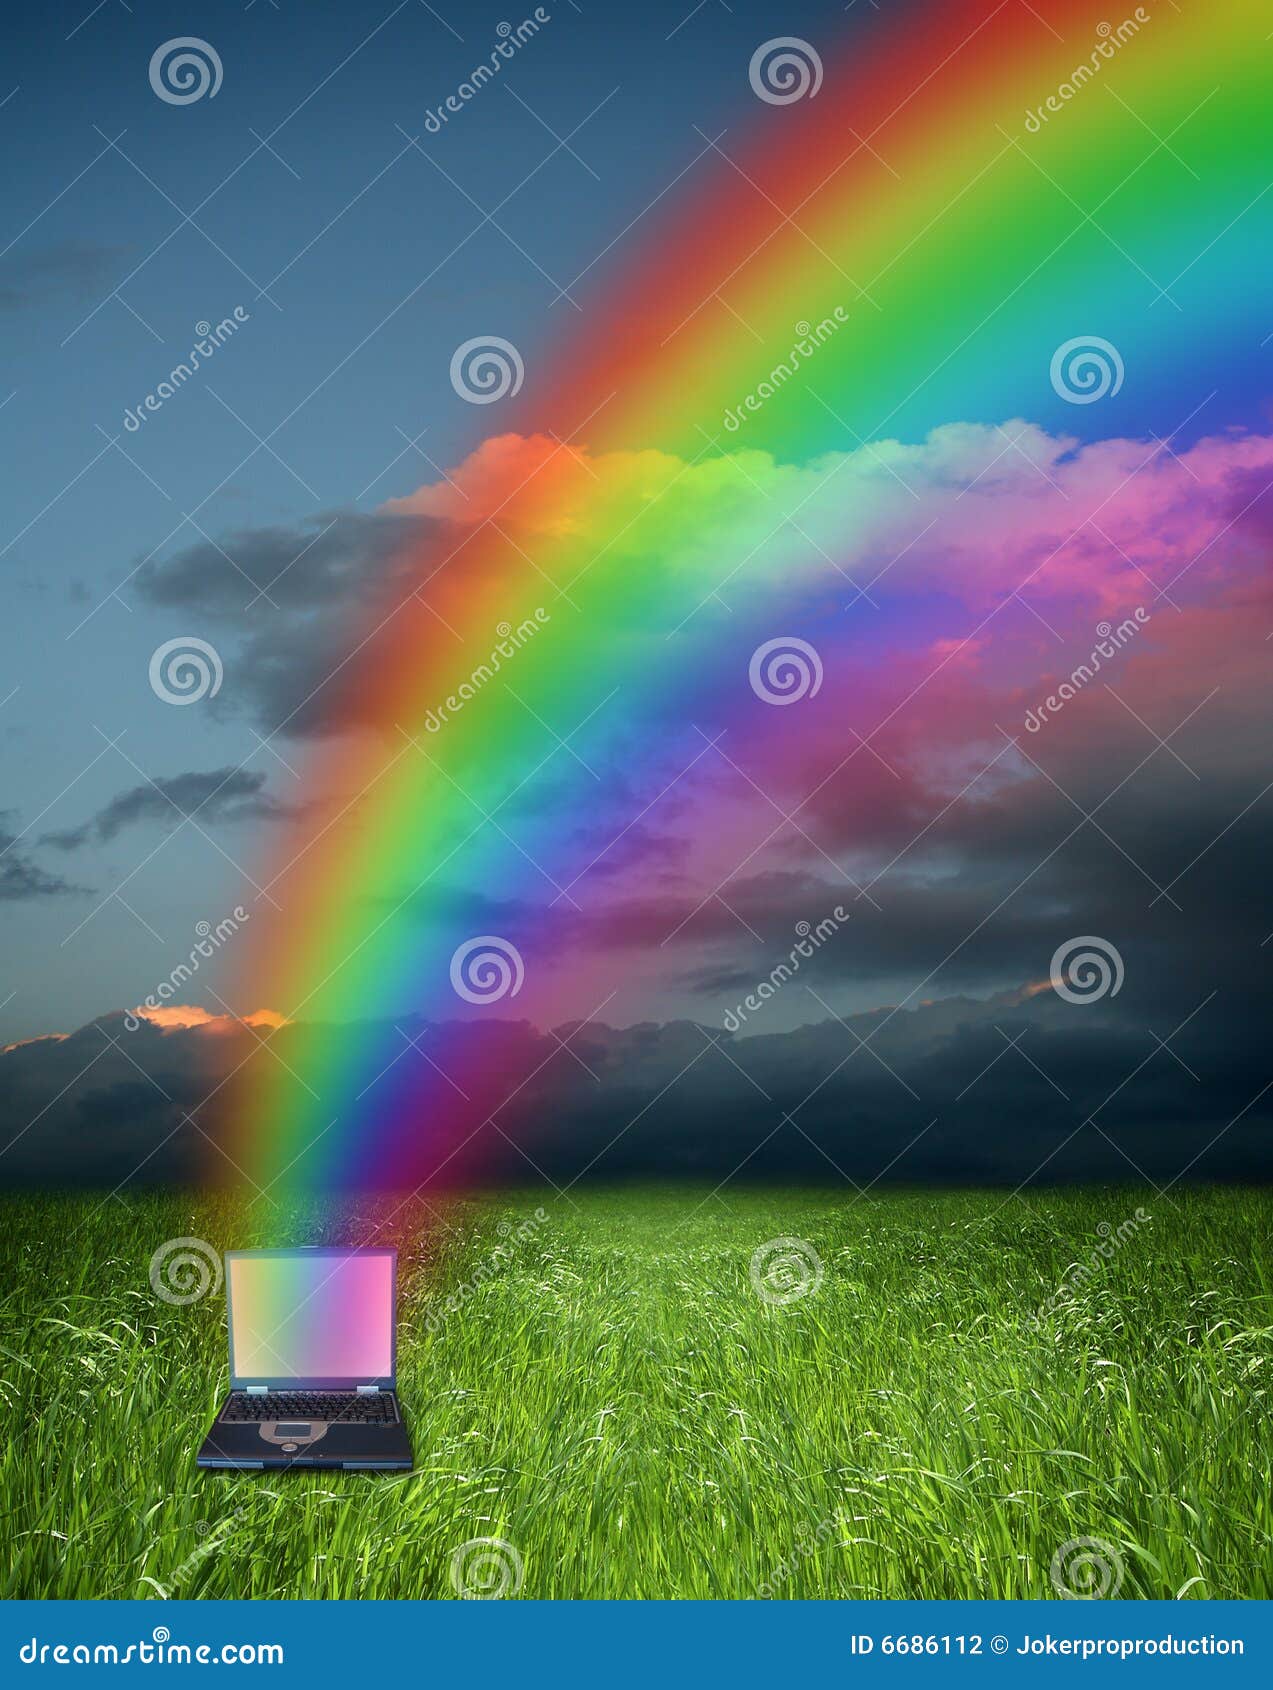 rainbow photo desktop